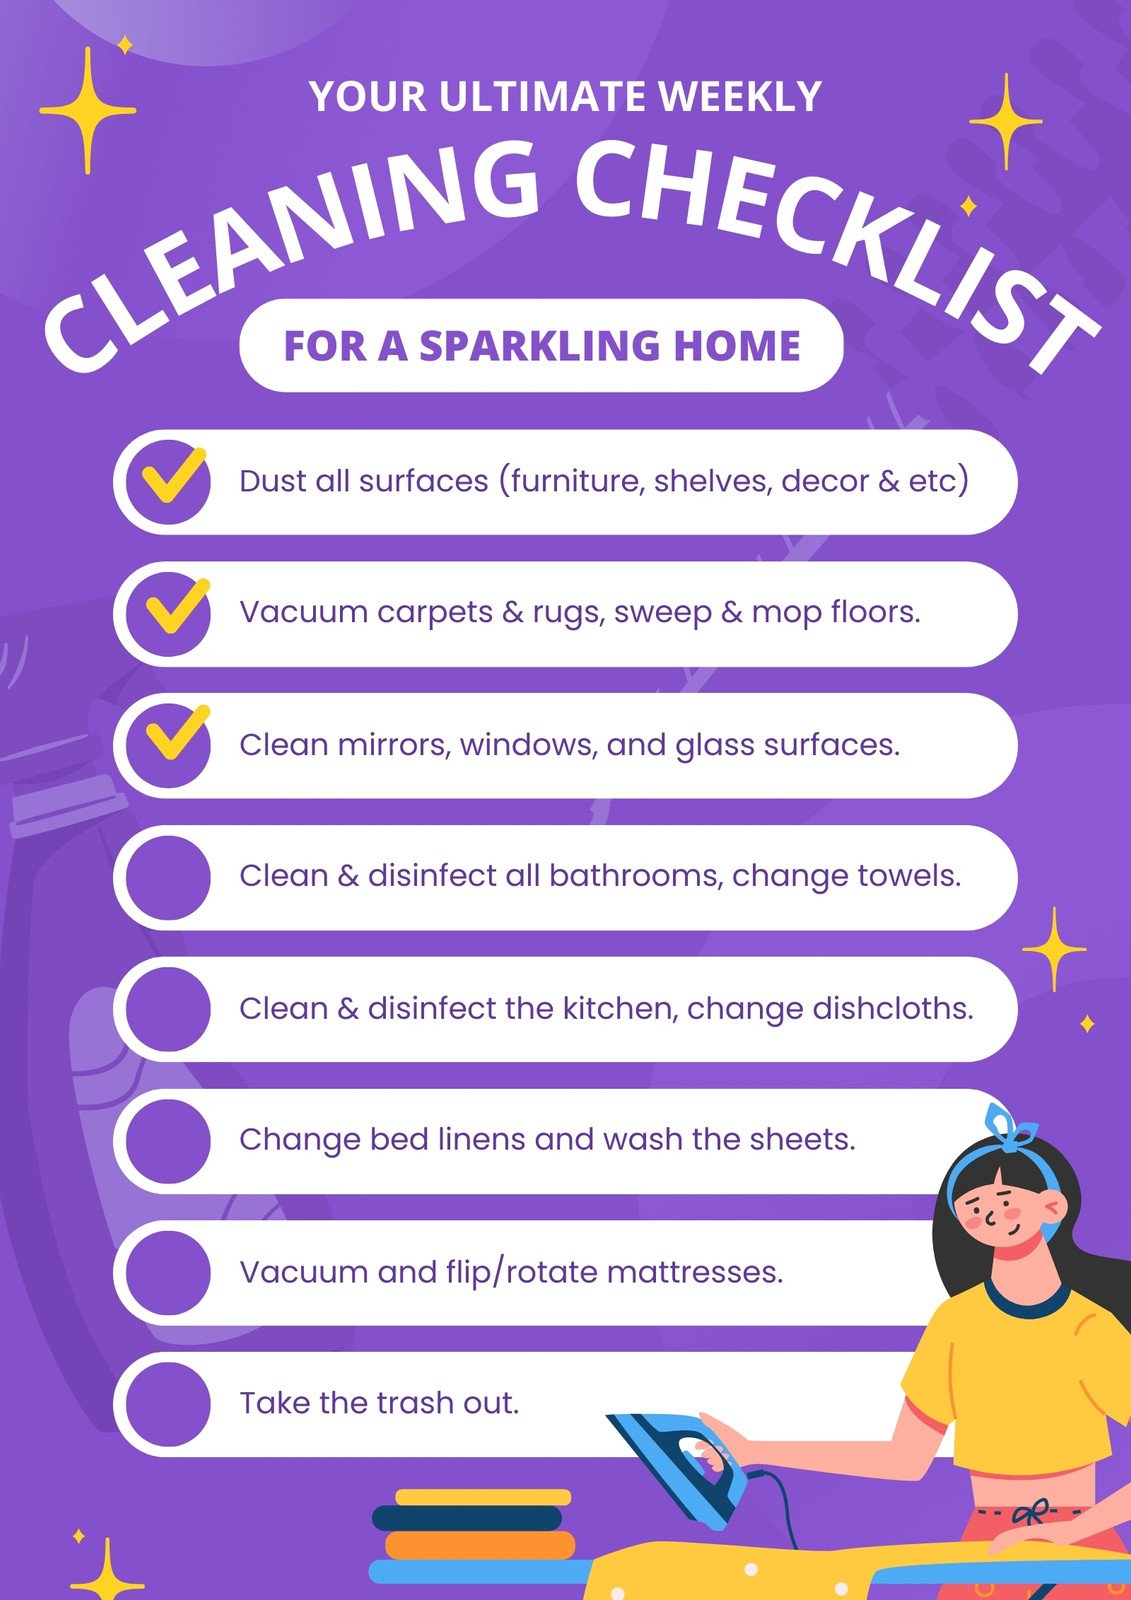 https://marketplace.canva.com/EAFd-_qyOqU/2/0/1131w/canva-purple-white-clean-bold-cleaning-checklist-lHvgyIEawHQ.jpg